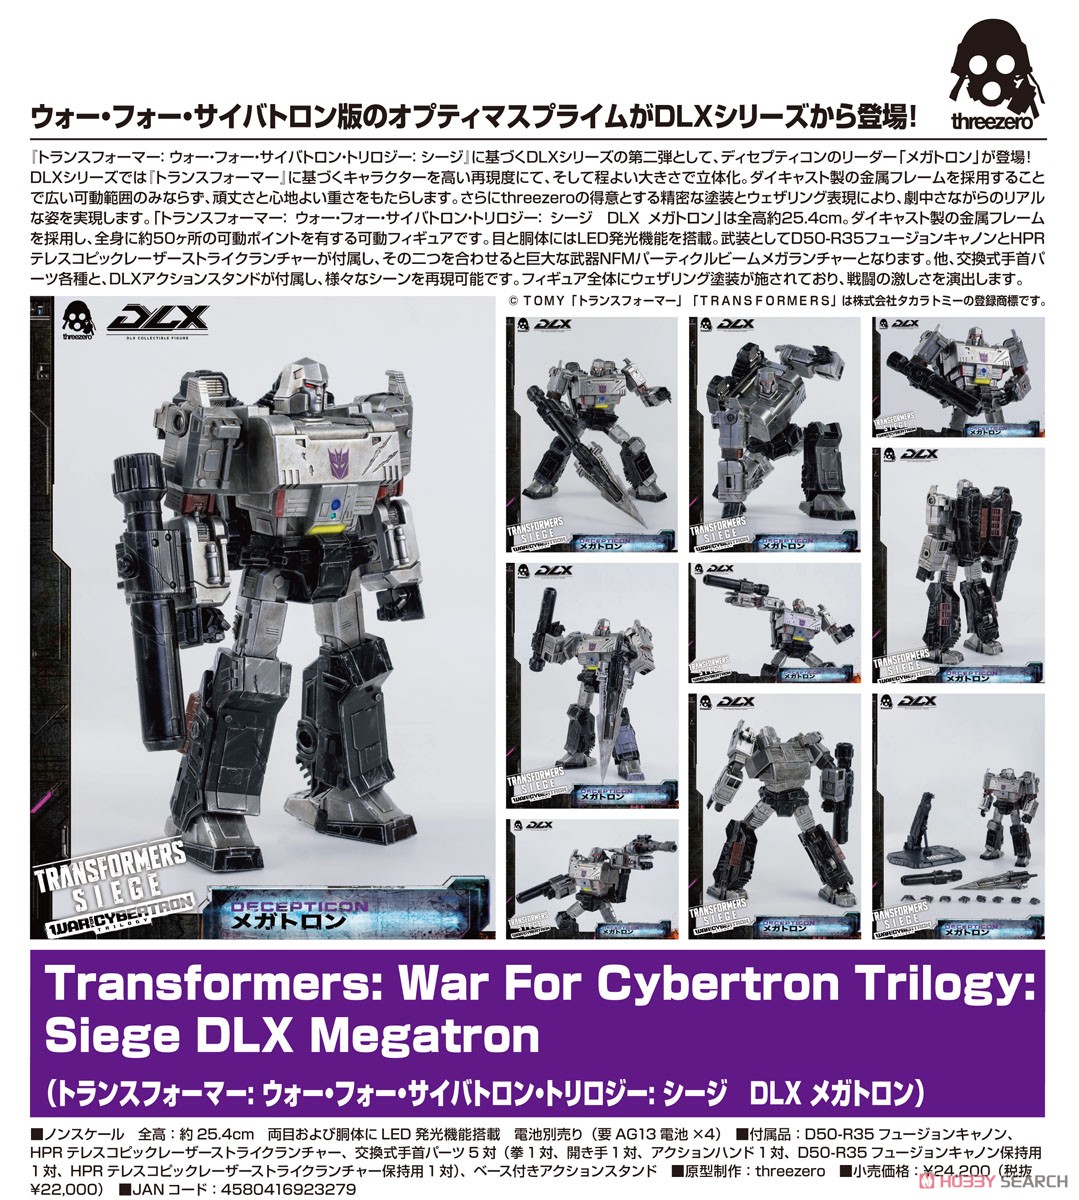 DLXスケール『メガトロン／DLX Megatron』Transformers: War For Cybertron Trilogy: Siege トランスフォーマー:ウォー・フォー・サイバトロン・トリロジー 可動フィギュア-013